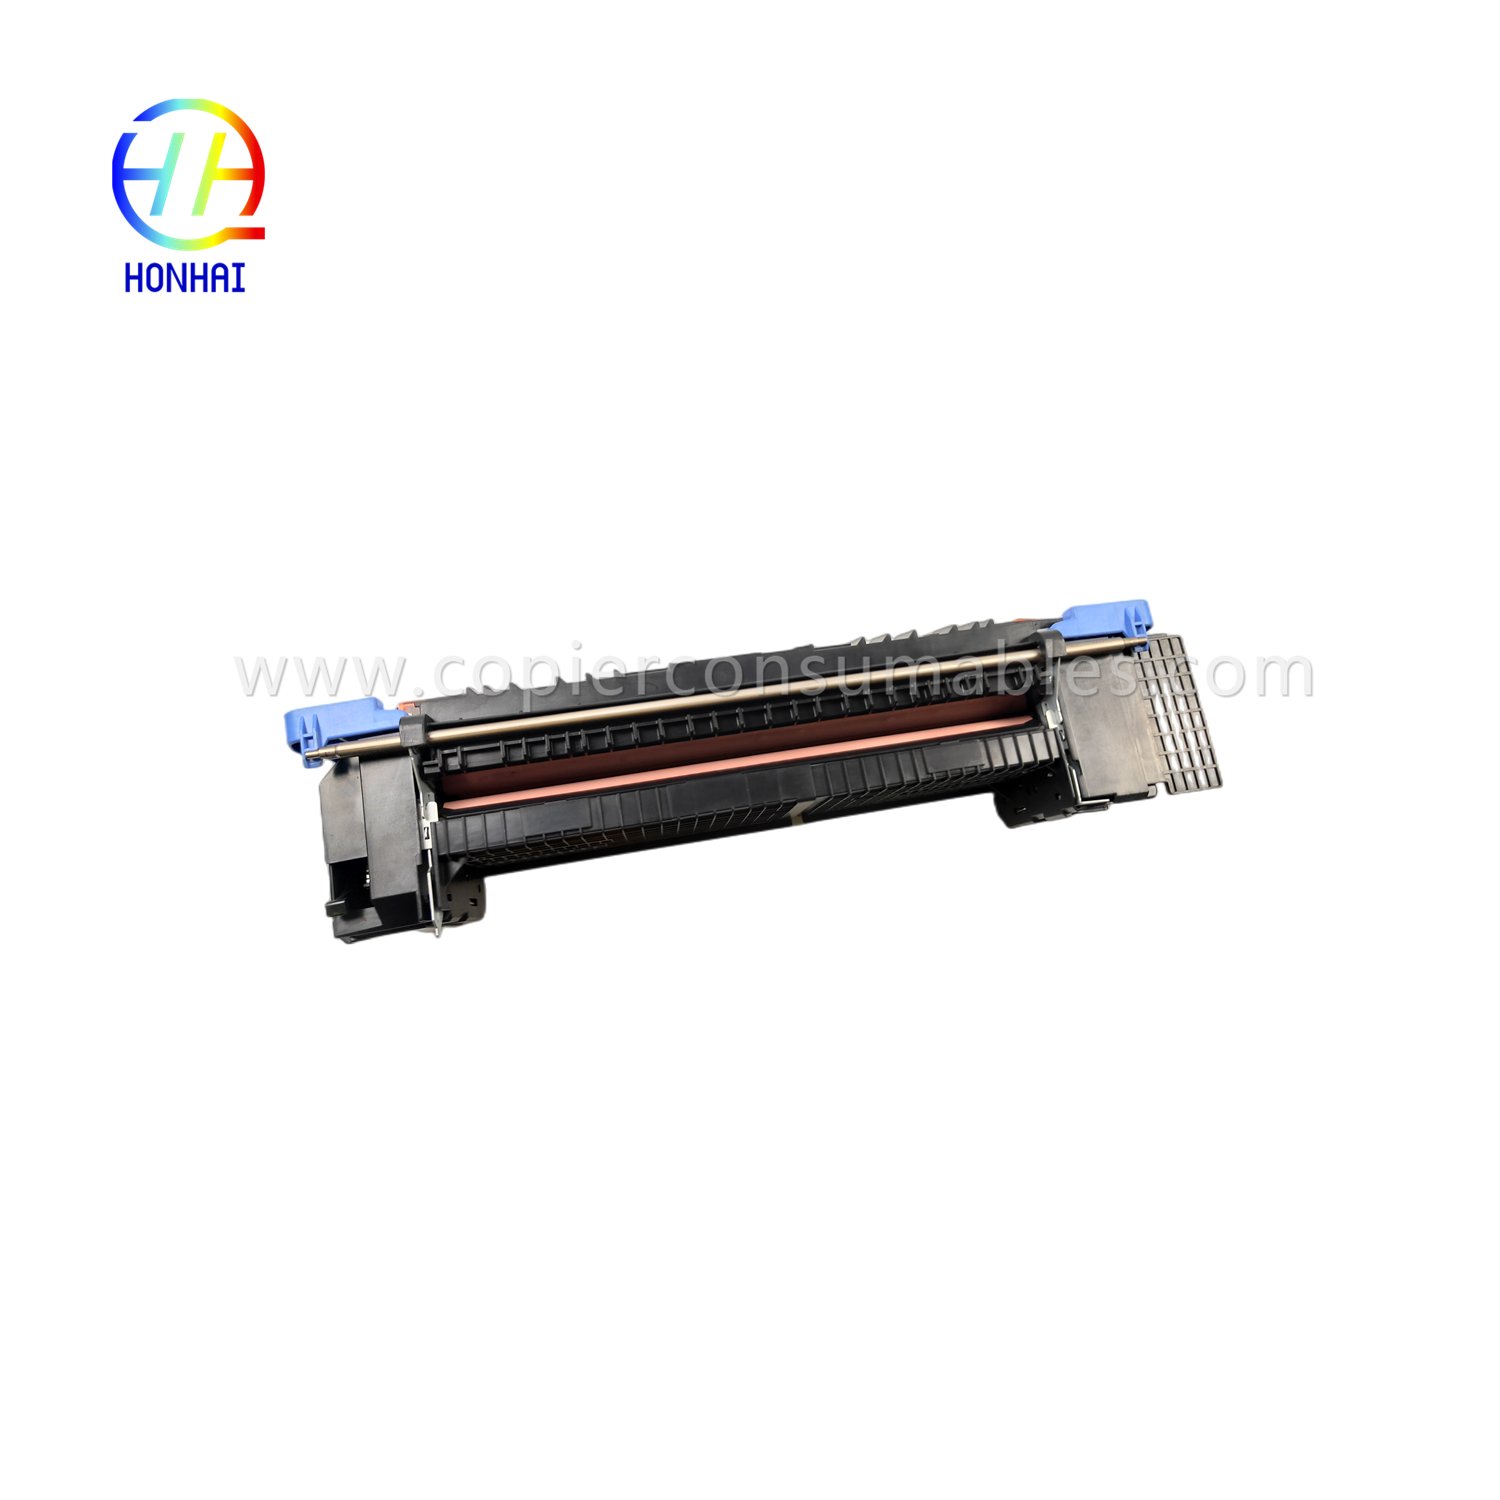 https://c585.goodao.net/fuser-assembly-unit-for-hp-m855-m880-m855dn-m855xh-m880z-m880z-c1n54-67901-c1n58-67901-fising-heating-fising-heating